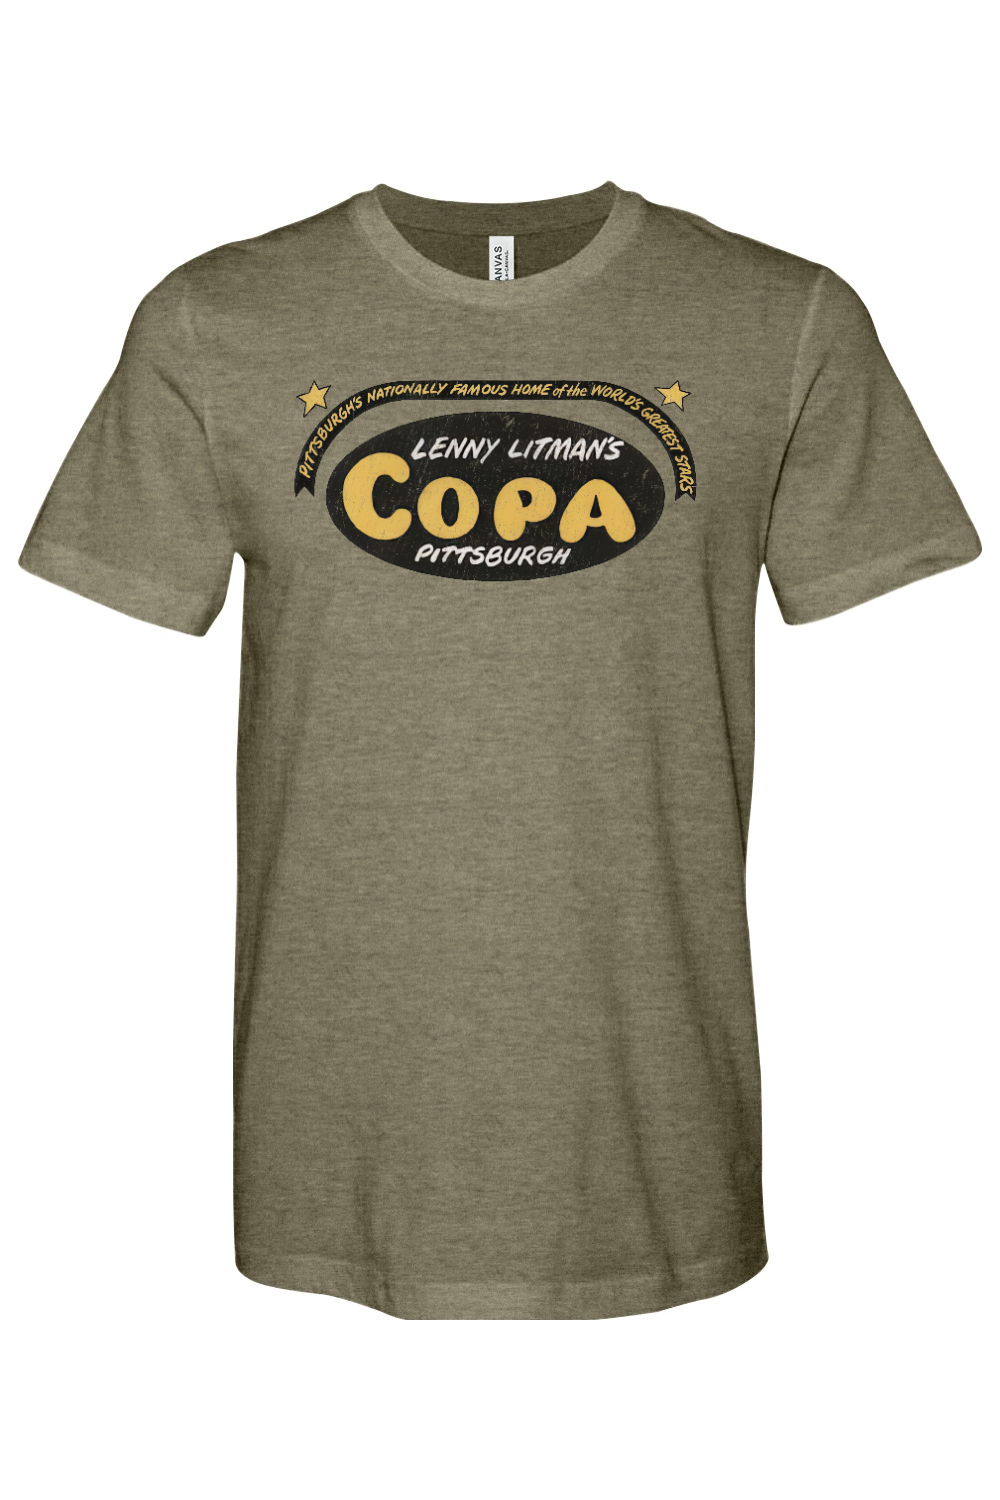 Lenny Litman's Copa - Pittsburgh - Yinzylvania